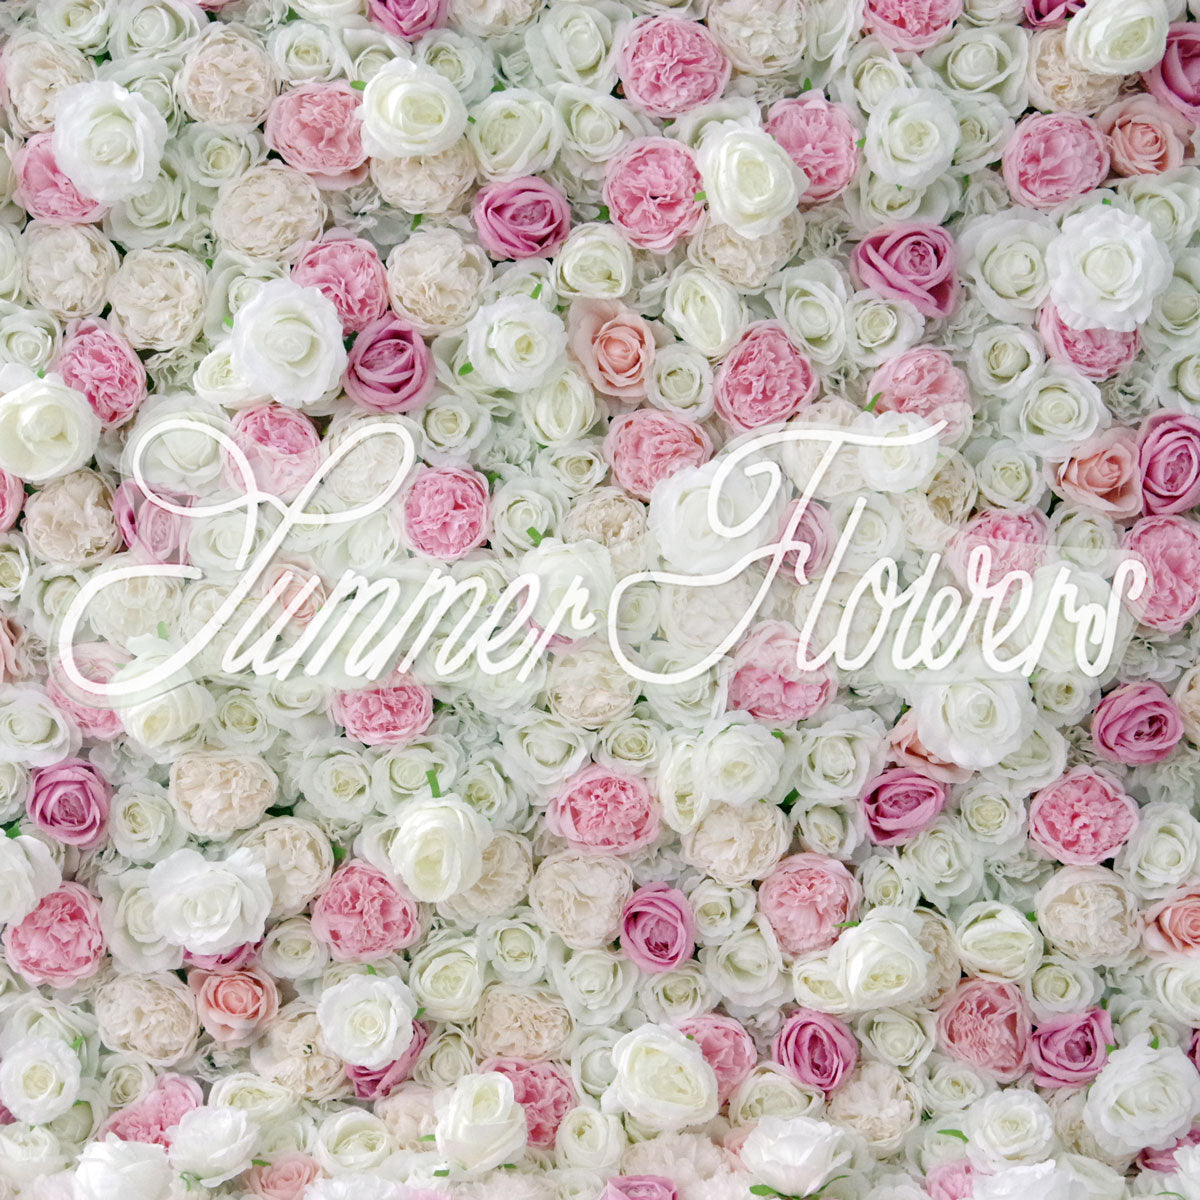 Summer Flower:CB-058-1 8ft*8ft Cloth Back Artificial Flower Wall Backdrop